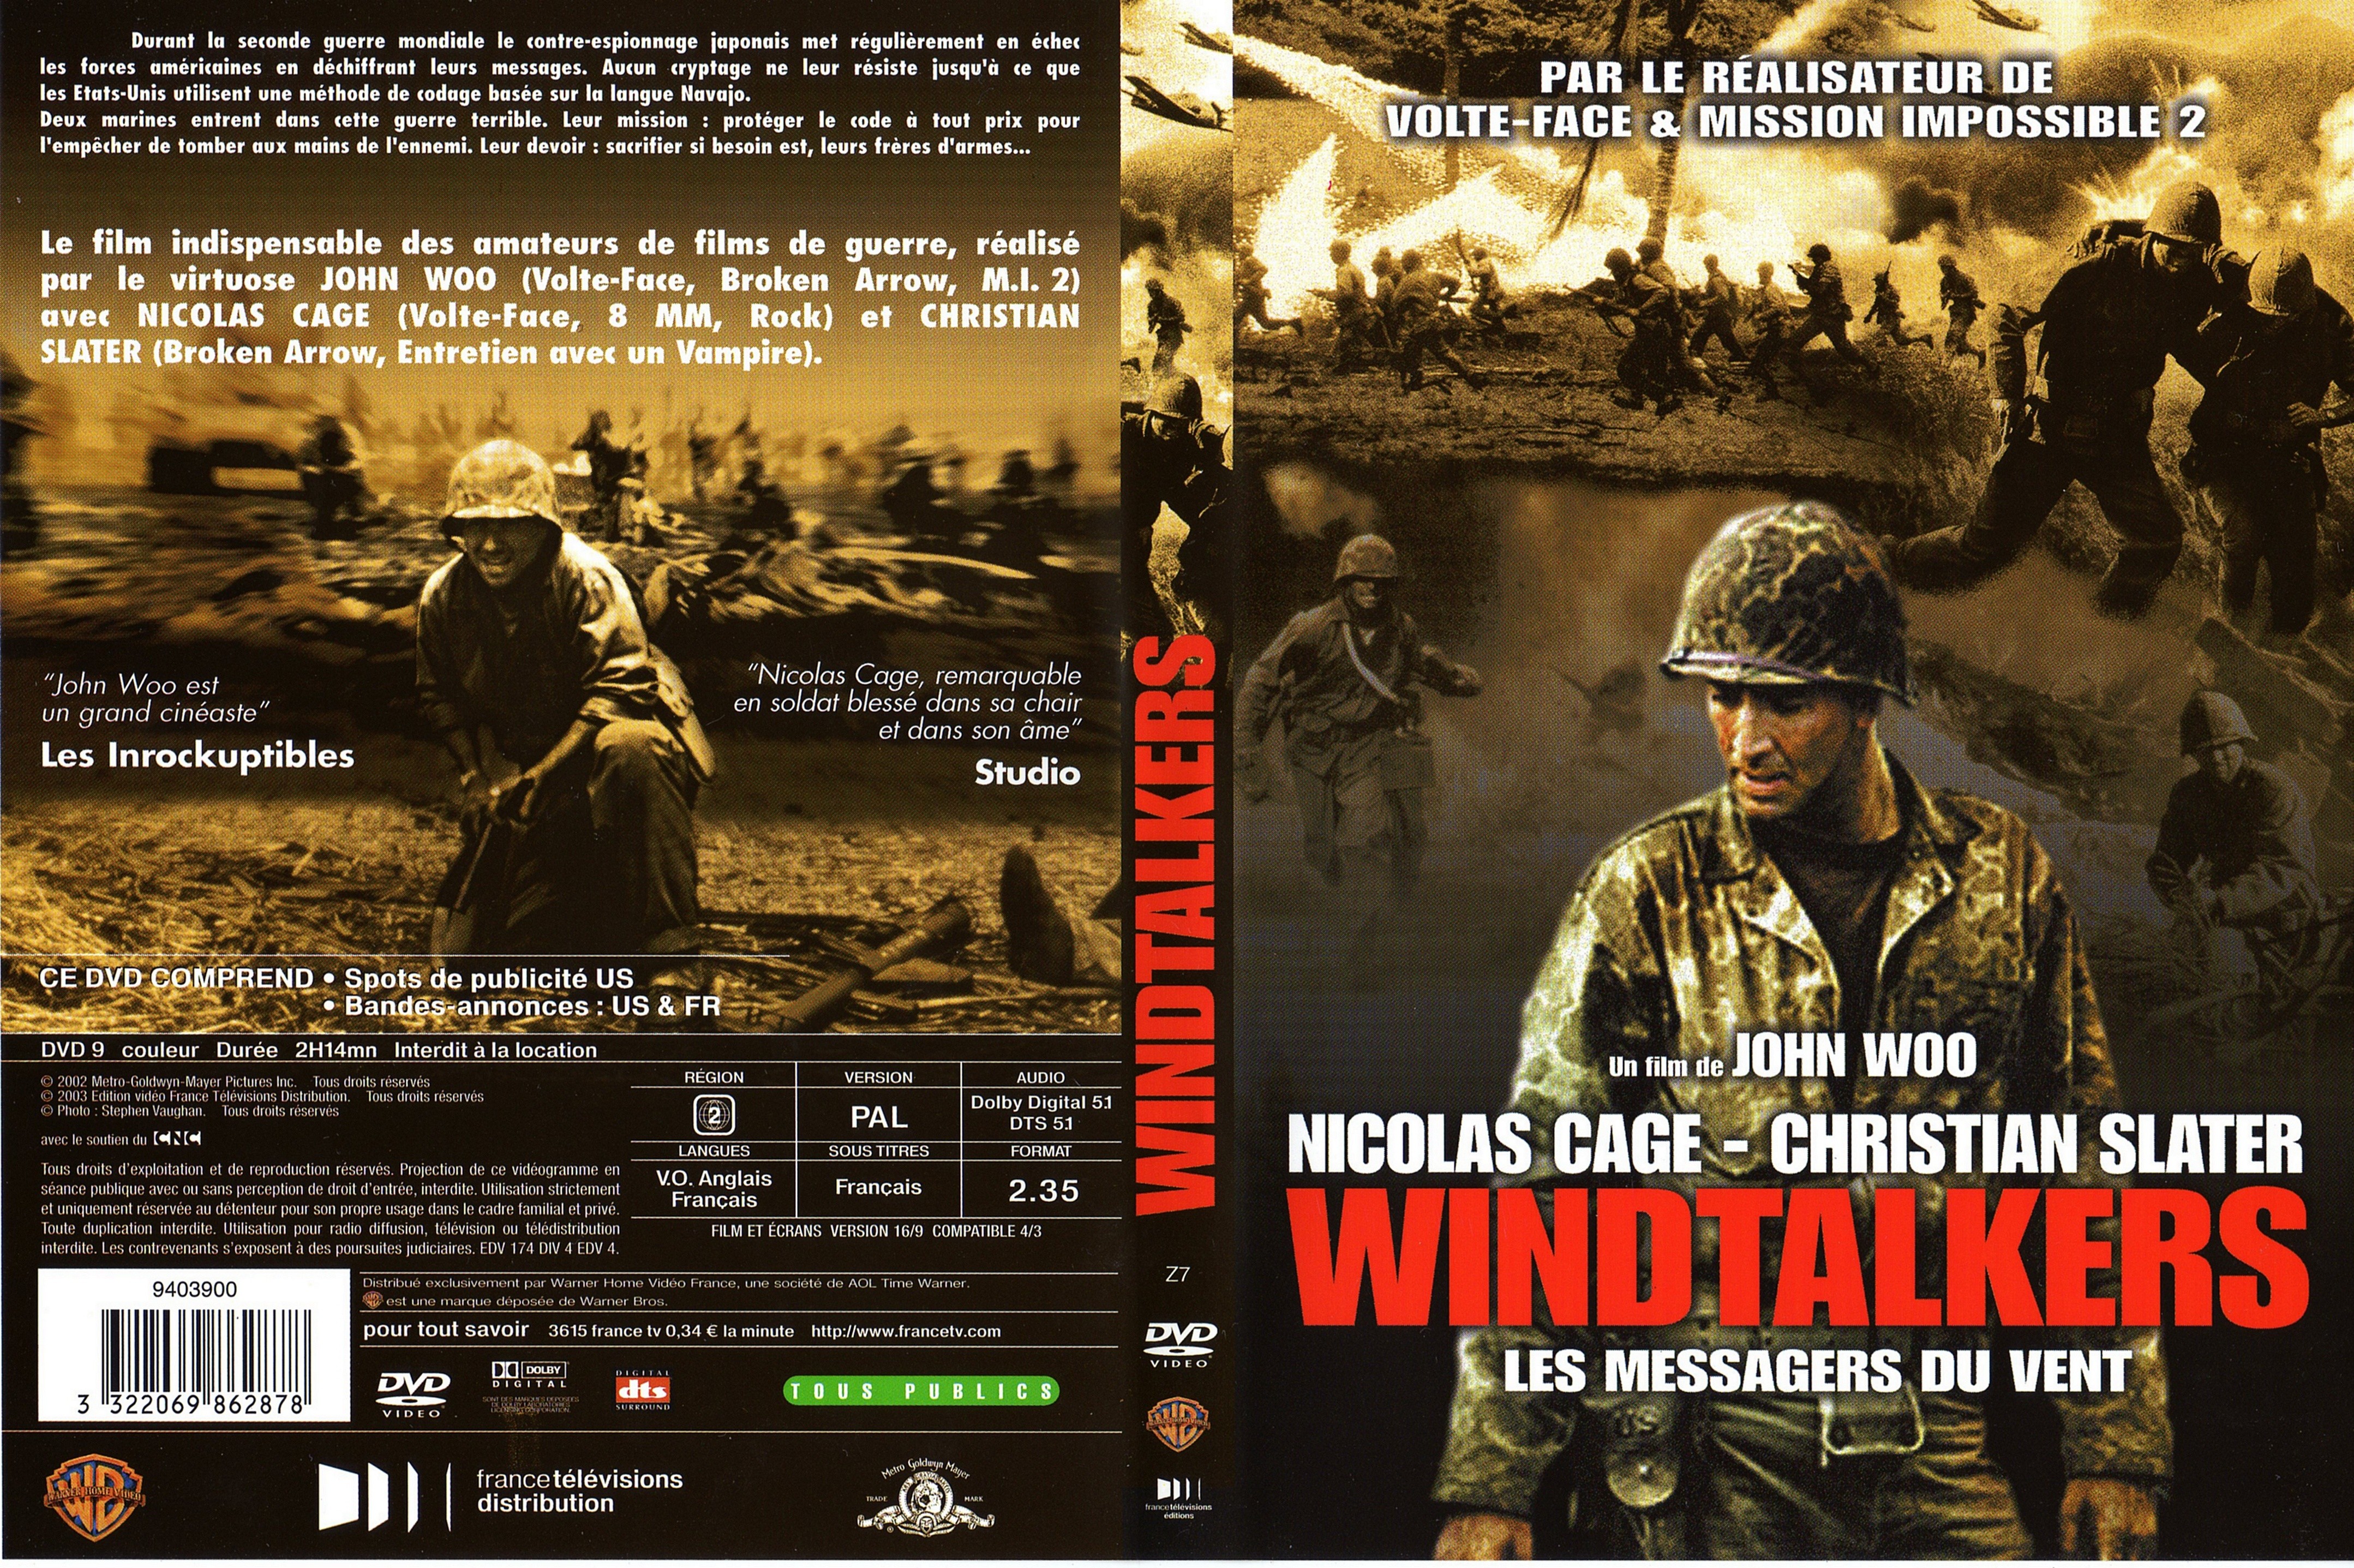 Jaquette DVD Windtalkers